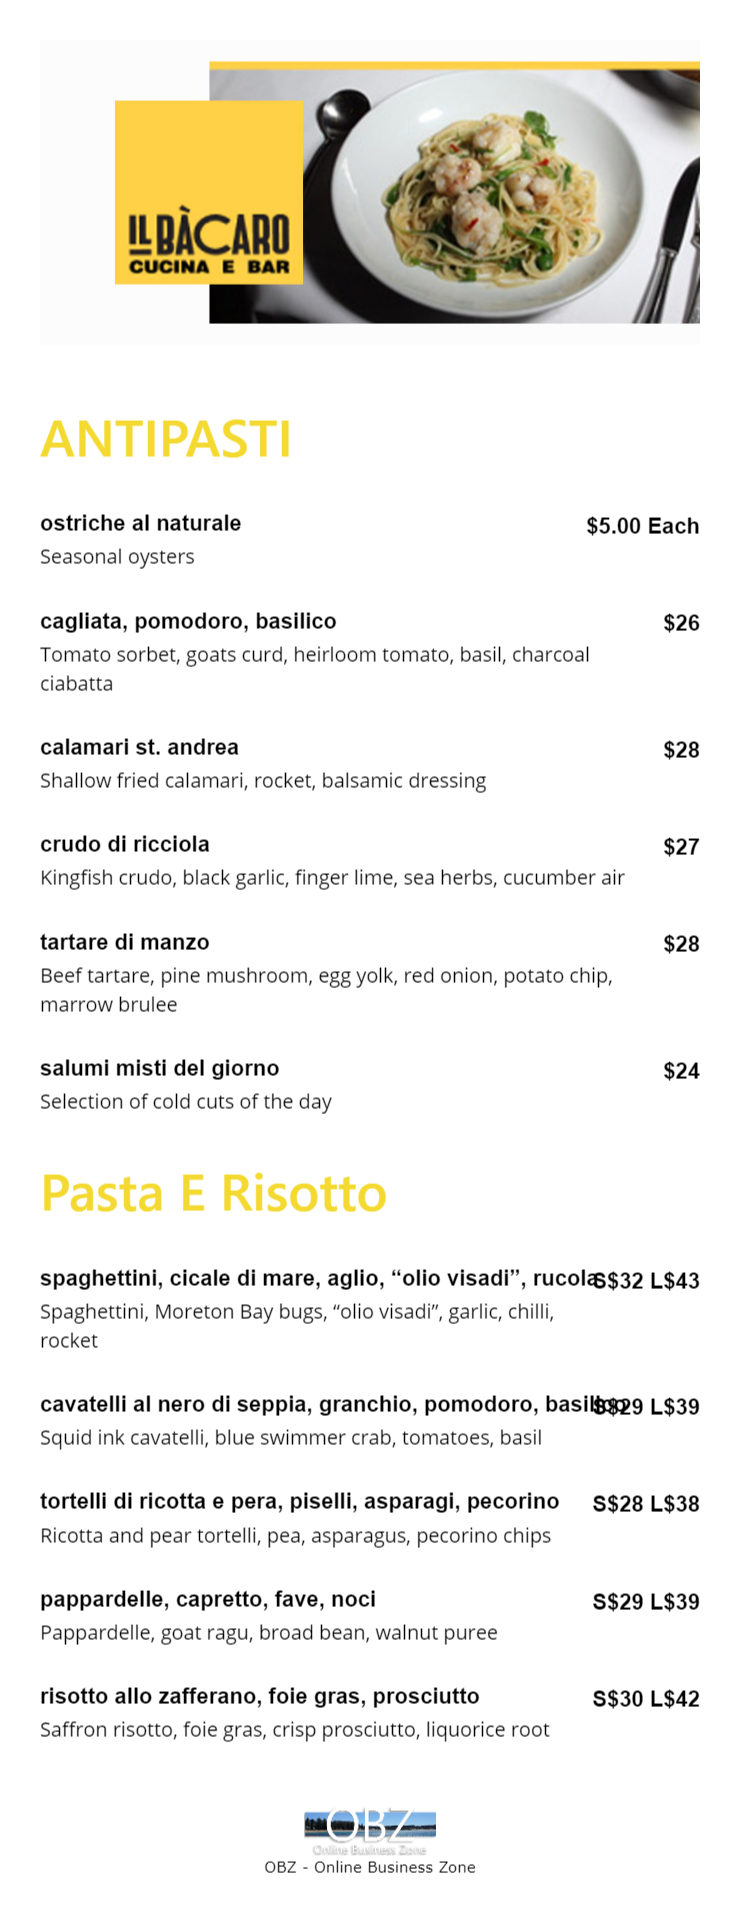 Il Bacaro Italian Restaurant Melbourne Melbourne Region - VIC | OBZ Online Business Zone